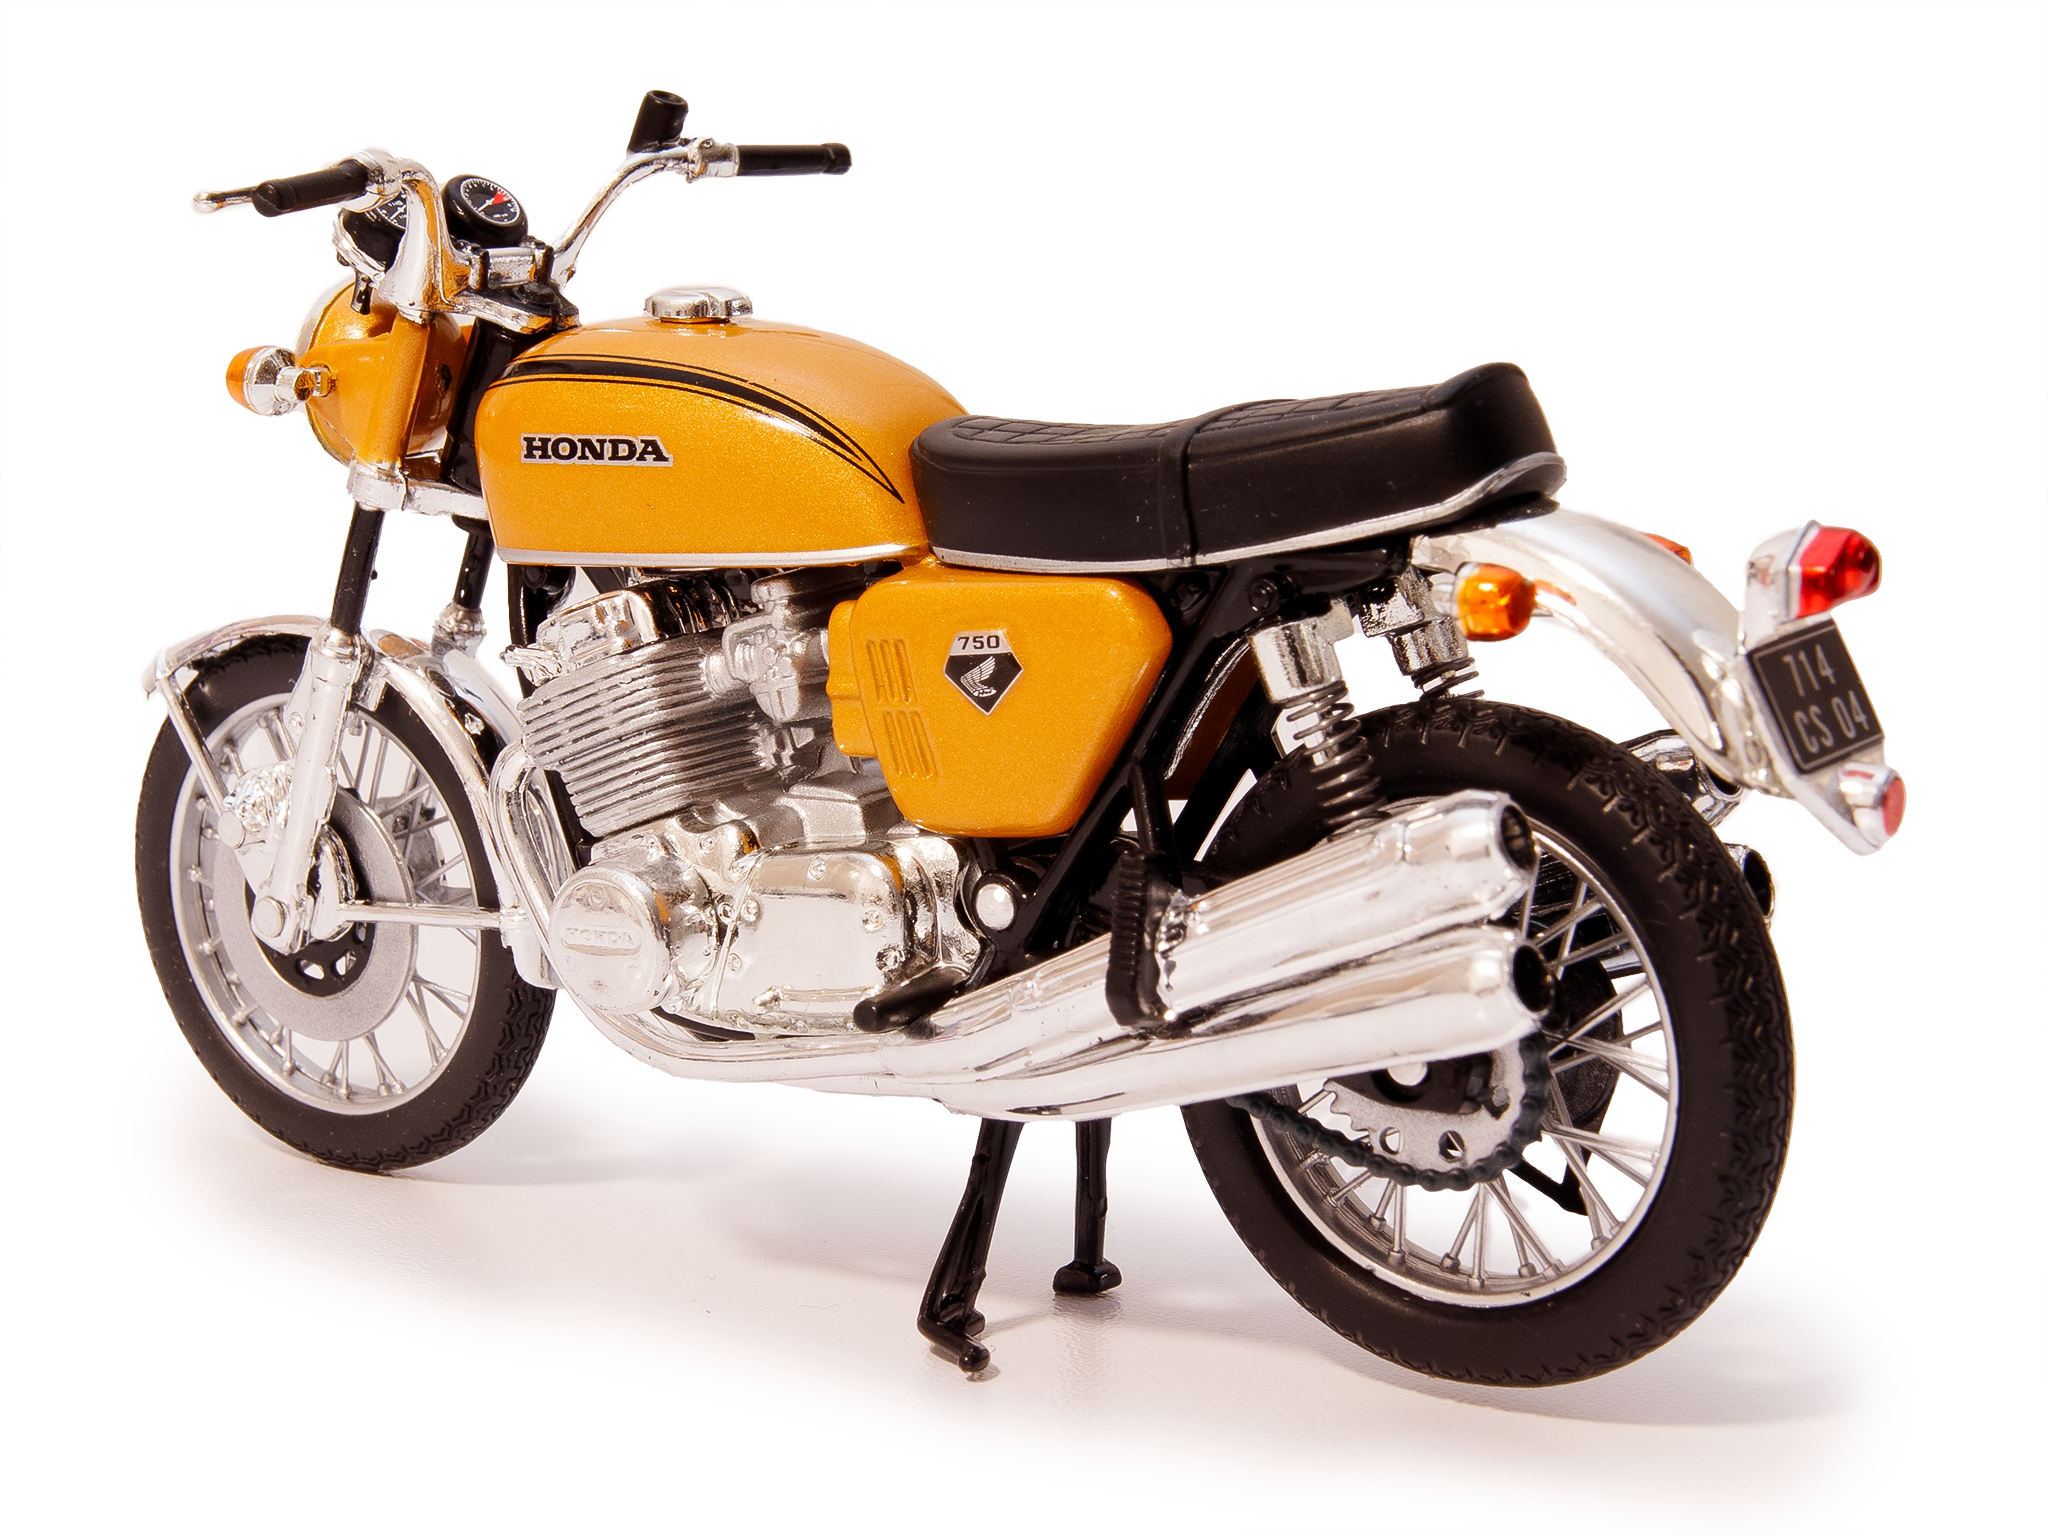 Honda CB750 1969 orange - 1:18 Scale Diecast Model Motorcycle